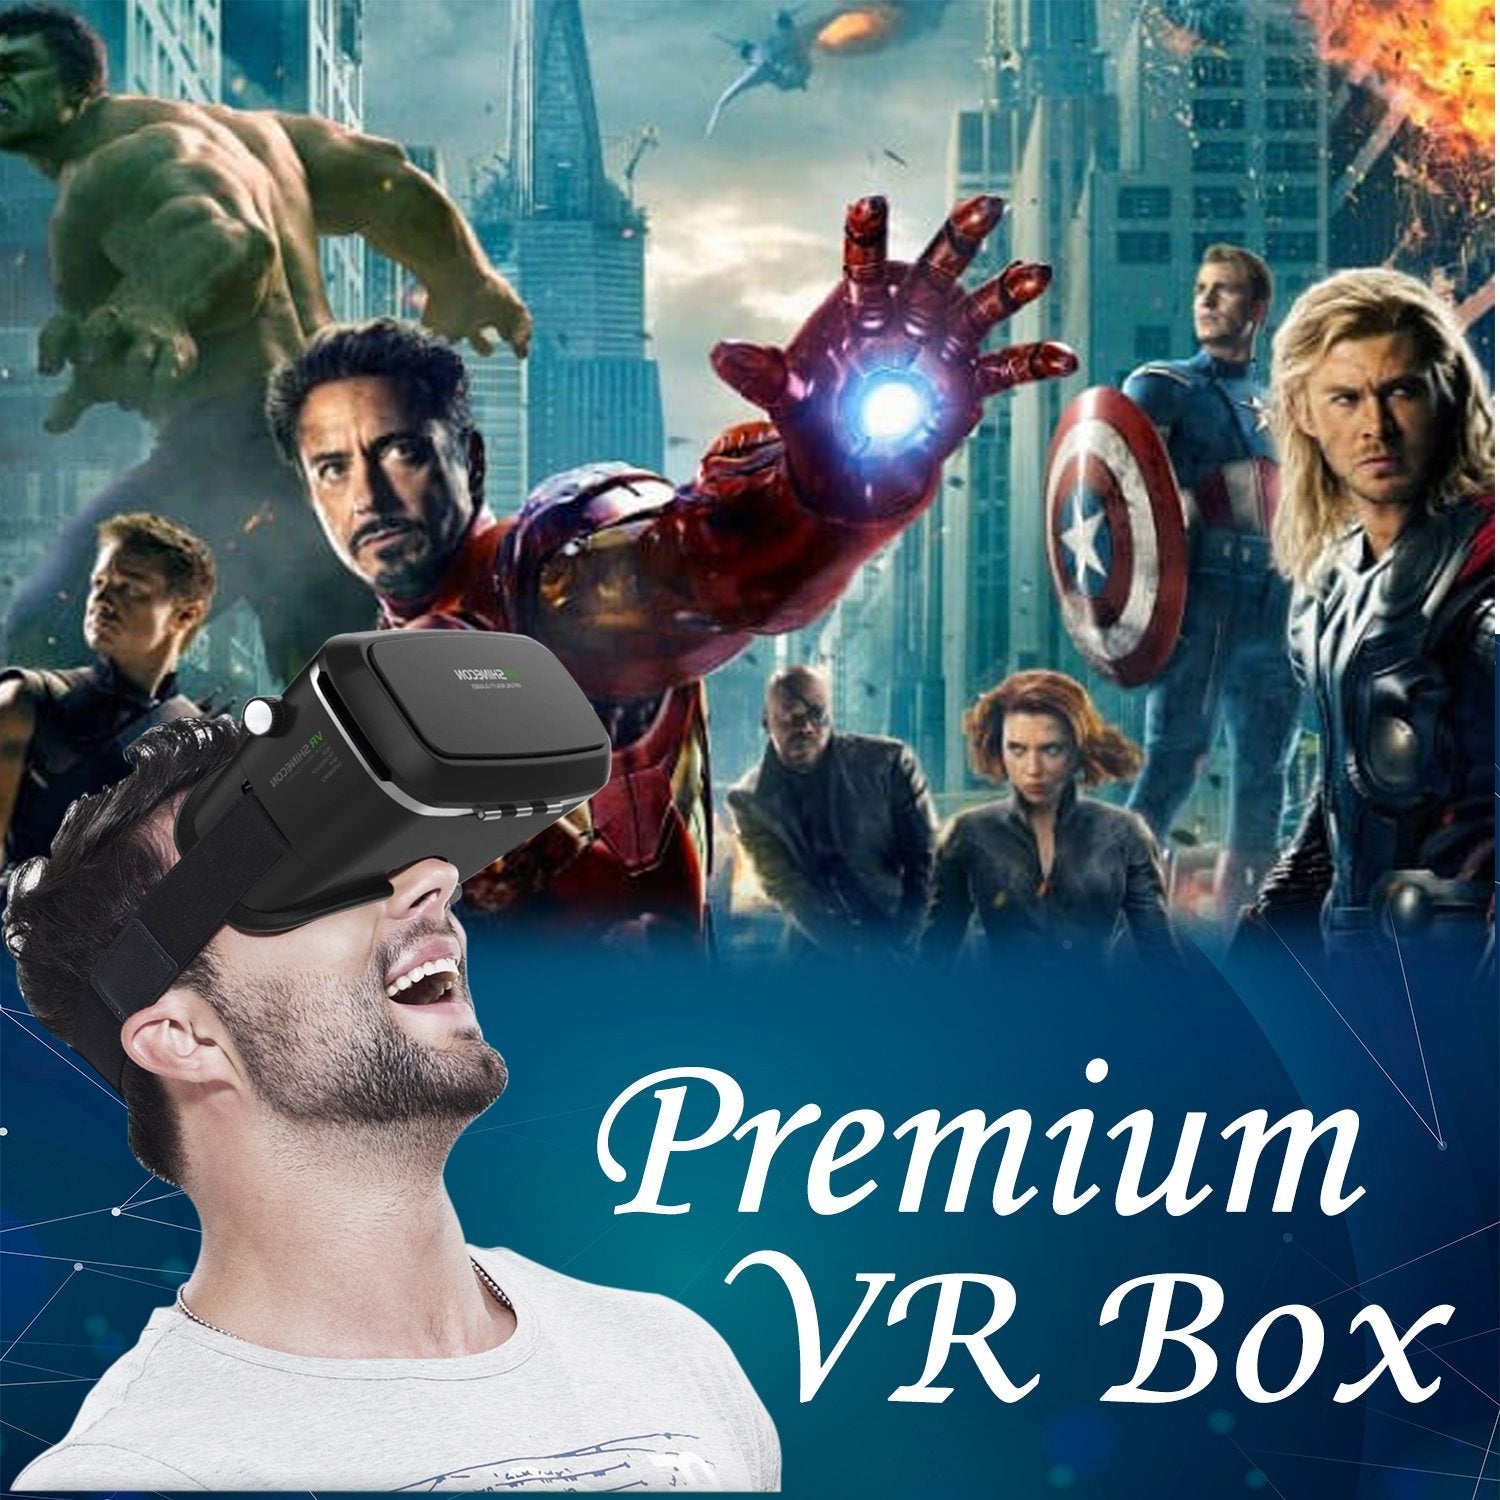 1447 VR Pro Virtual Reality 3D Glasses Headset DeoDap